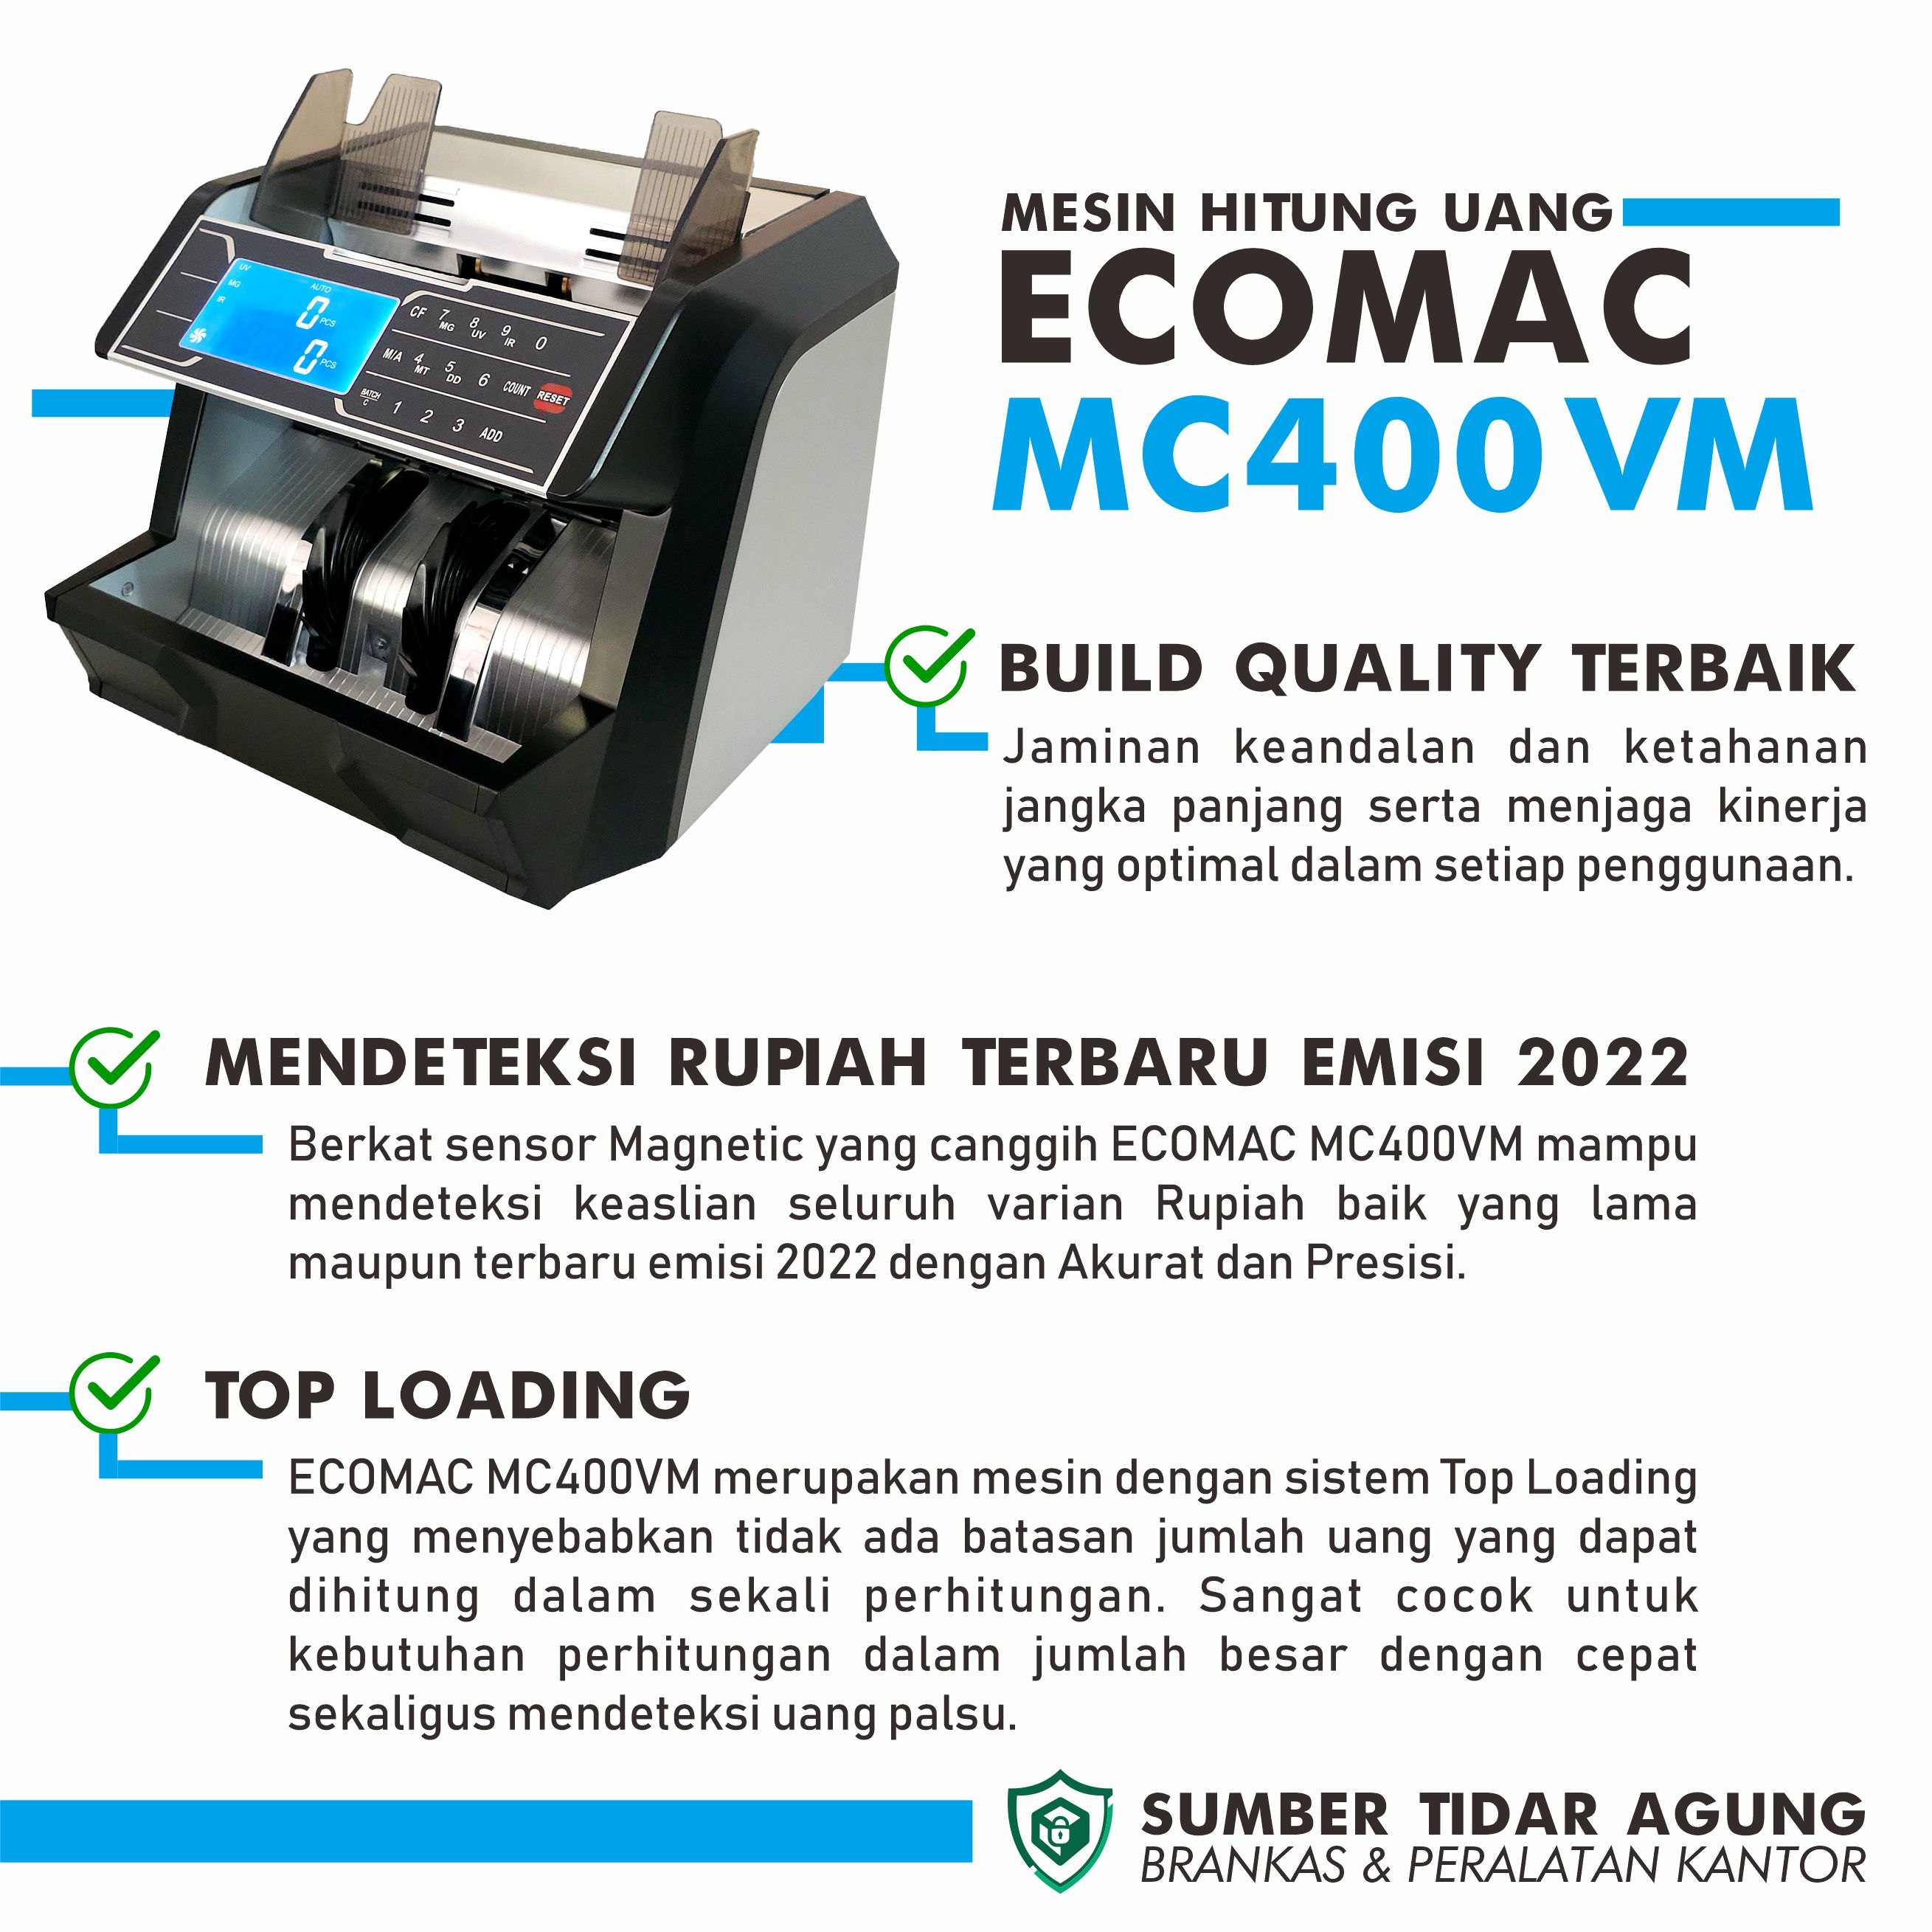 Jual Mesin Penghitung Hitung Uang ECOMAC MC400VM Plus - Money Counter MC400  di Seller Smart Comp & Solution Official Store - Batununggal, Kota Bandung